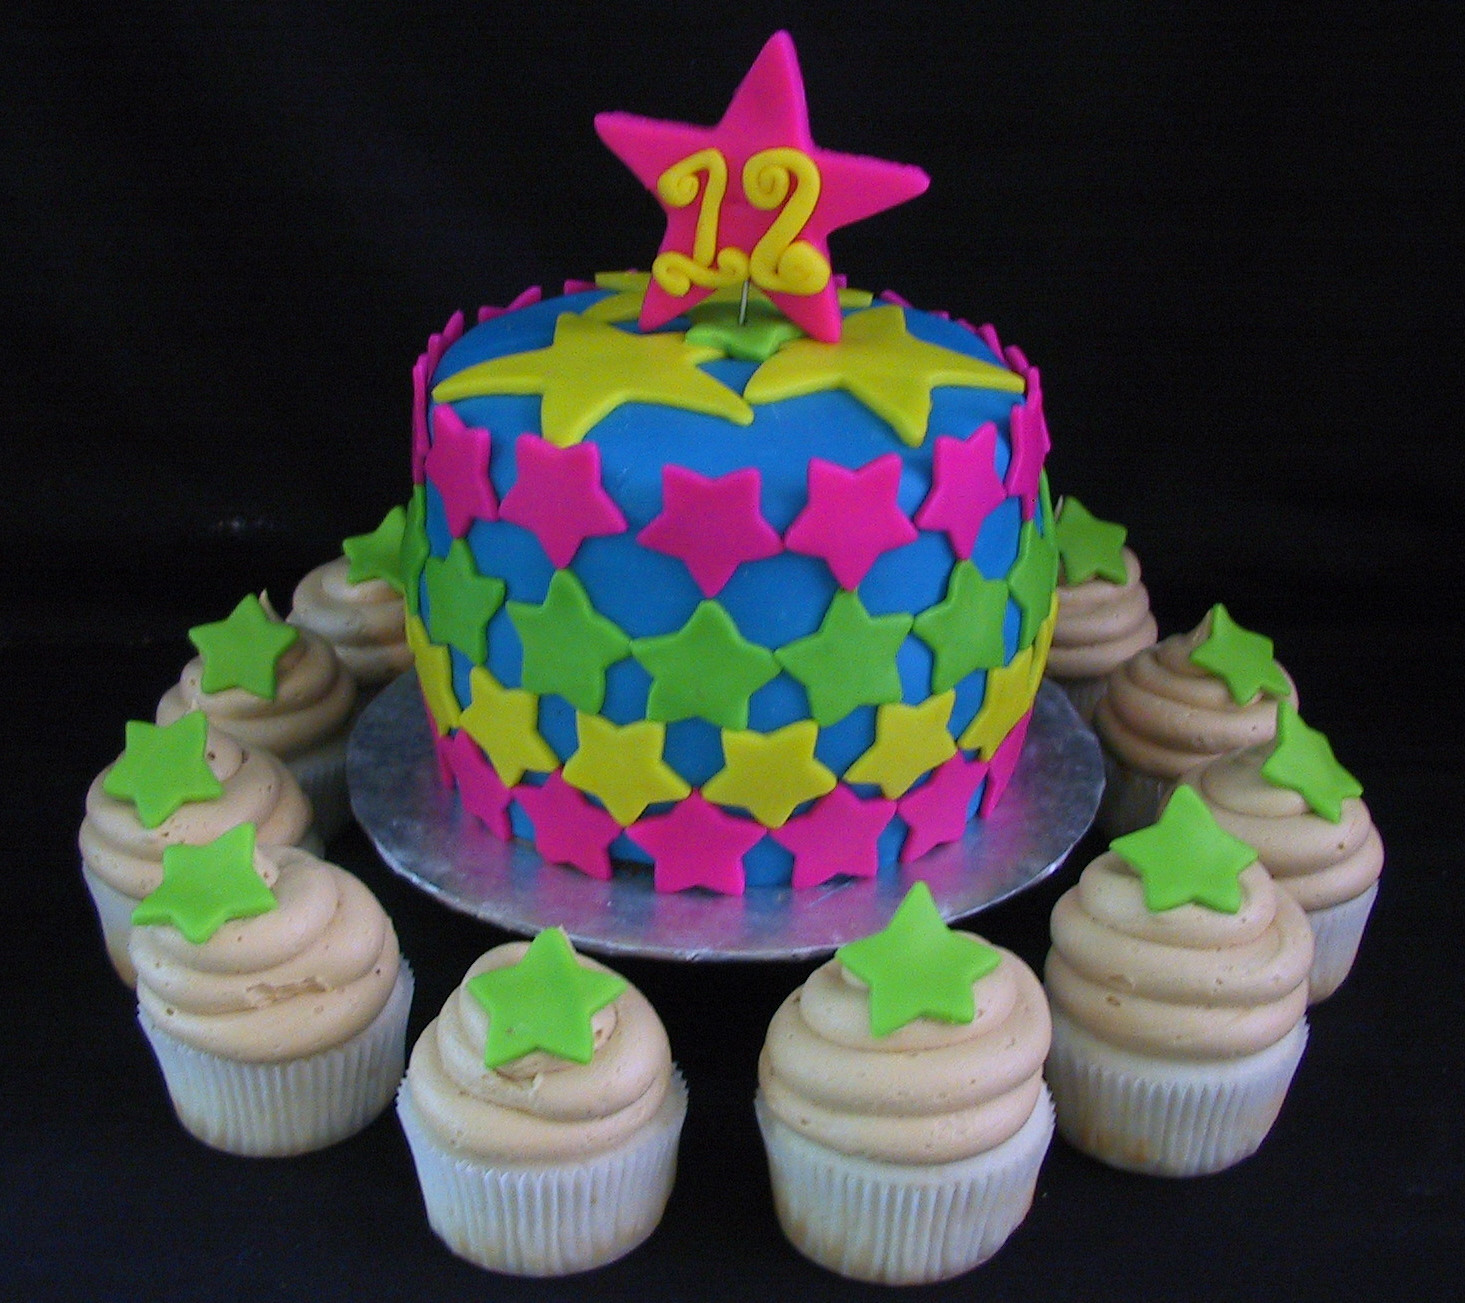 Fondant Birthday Cakes
 Fondant star birthday cake with cupcakes